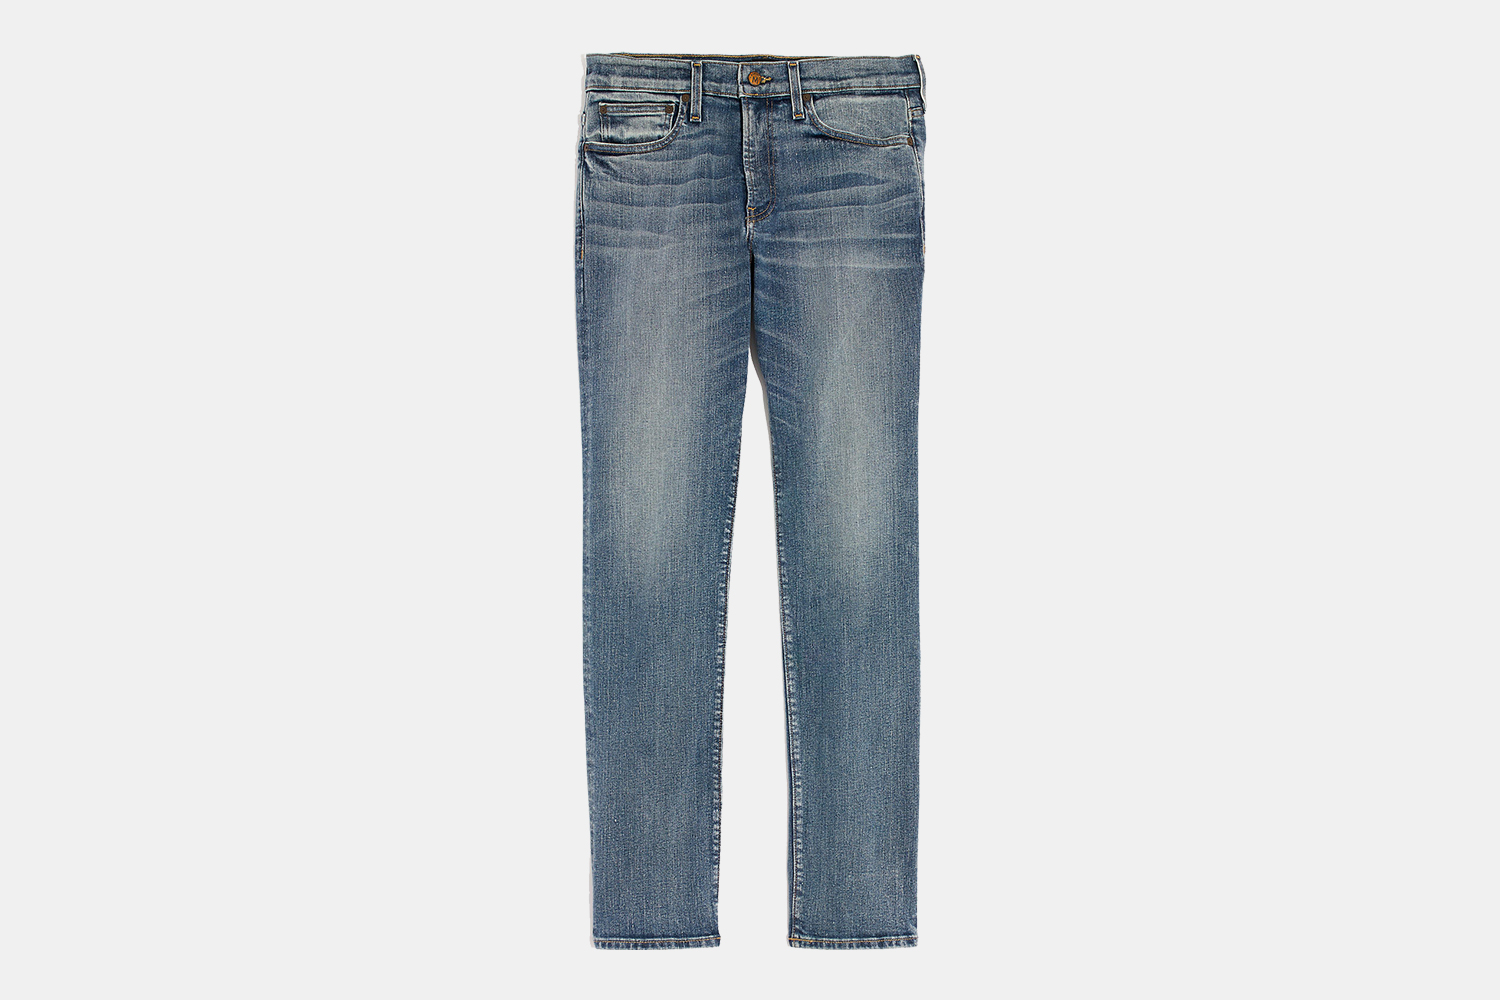 Madewell Men Slim Jeans in Danforth Wash